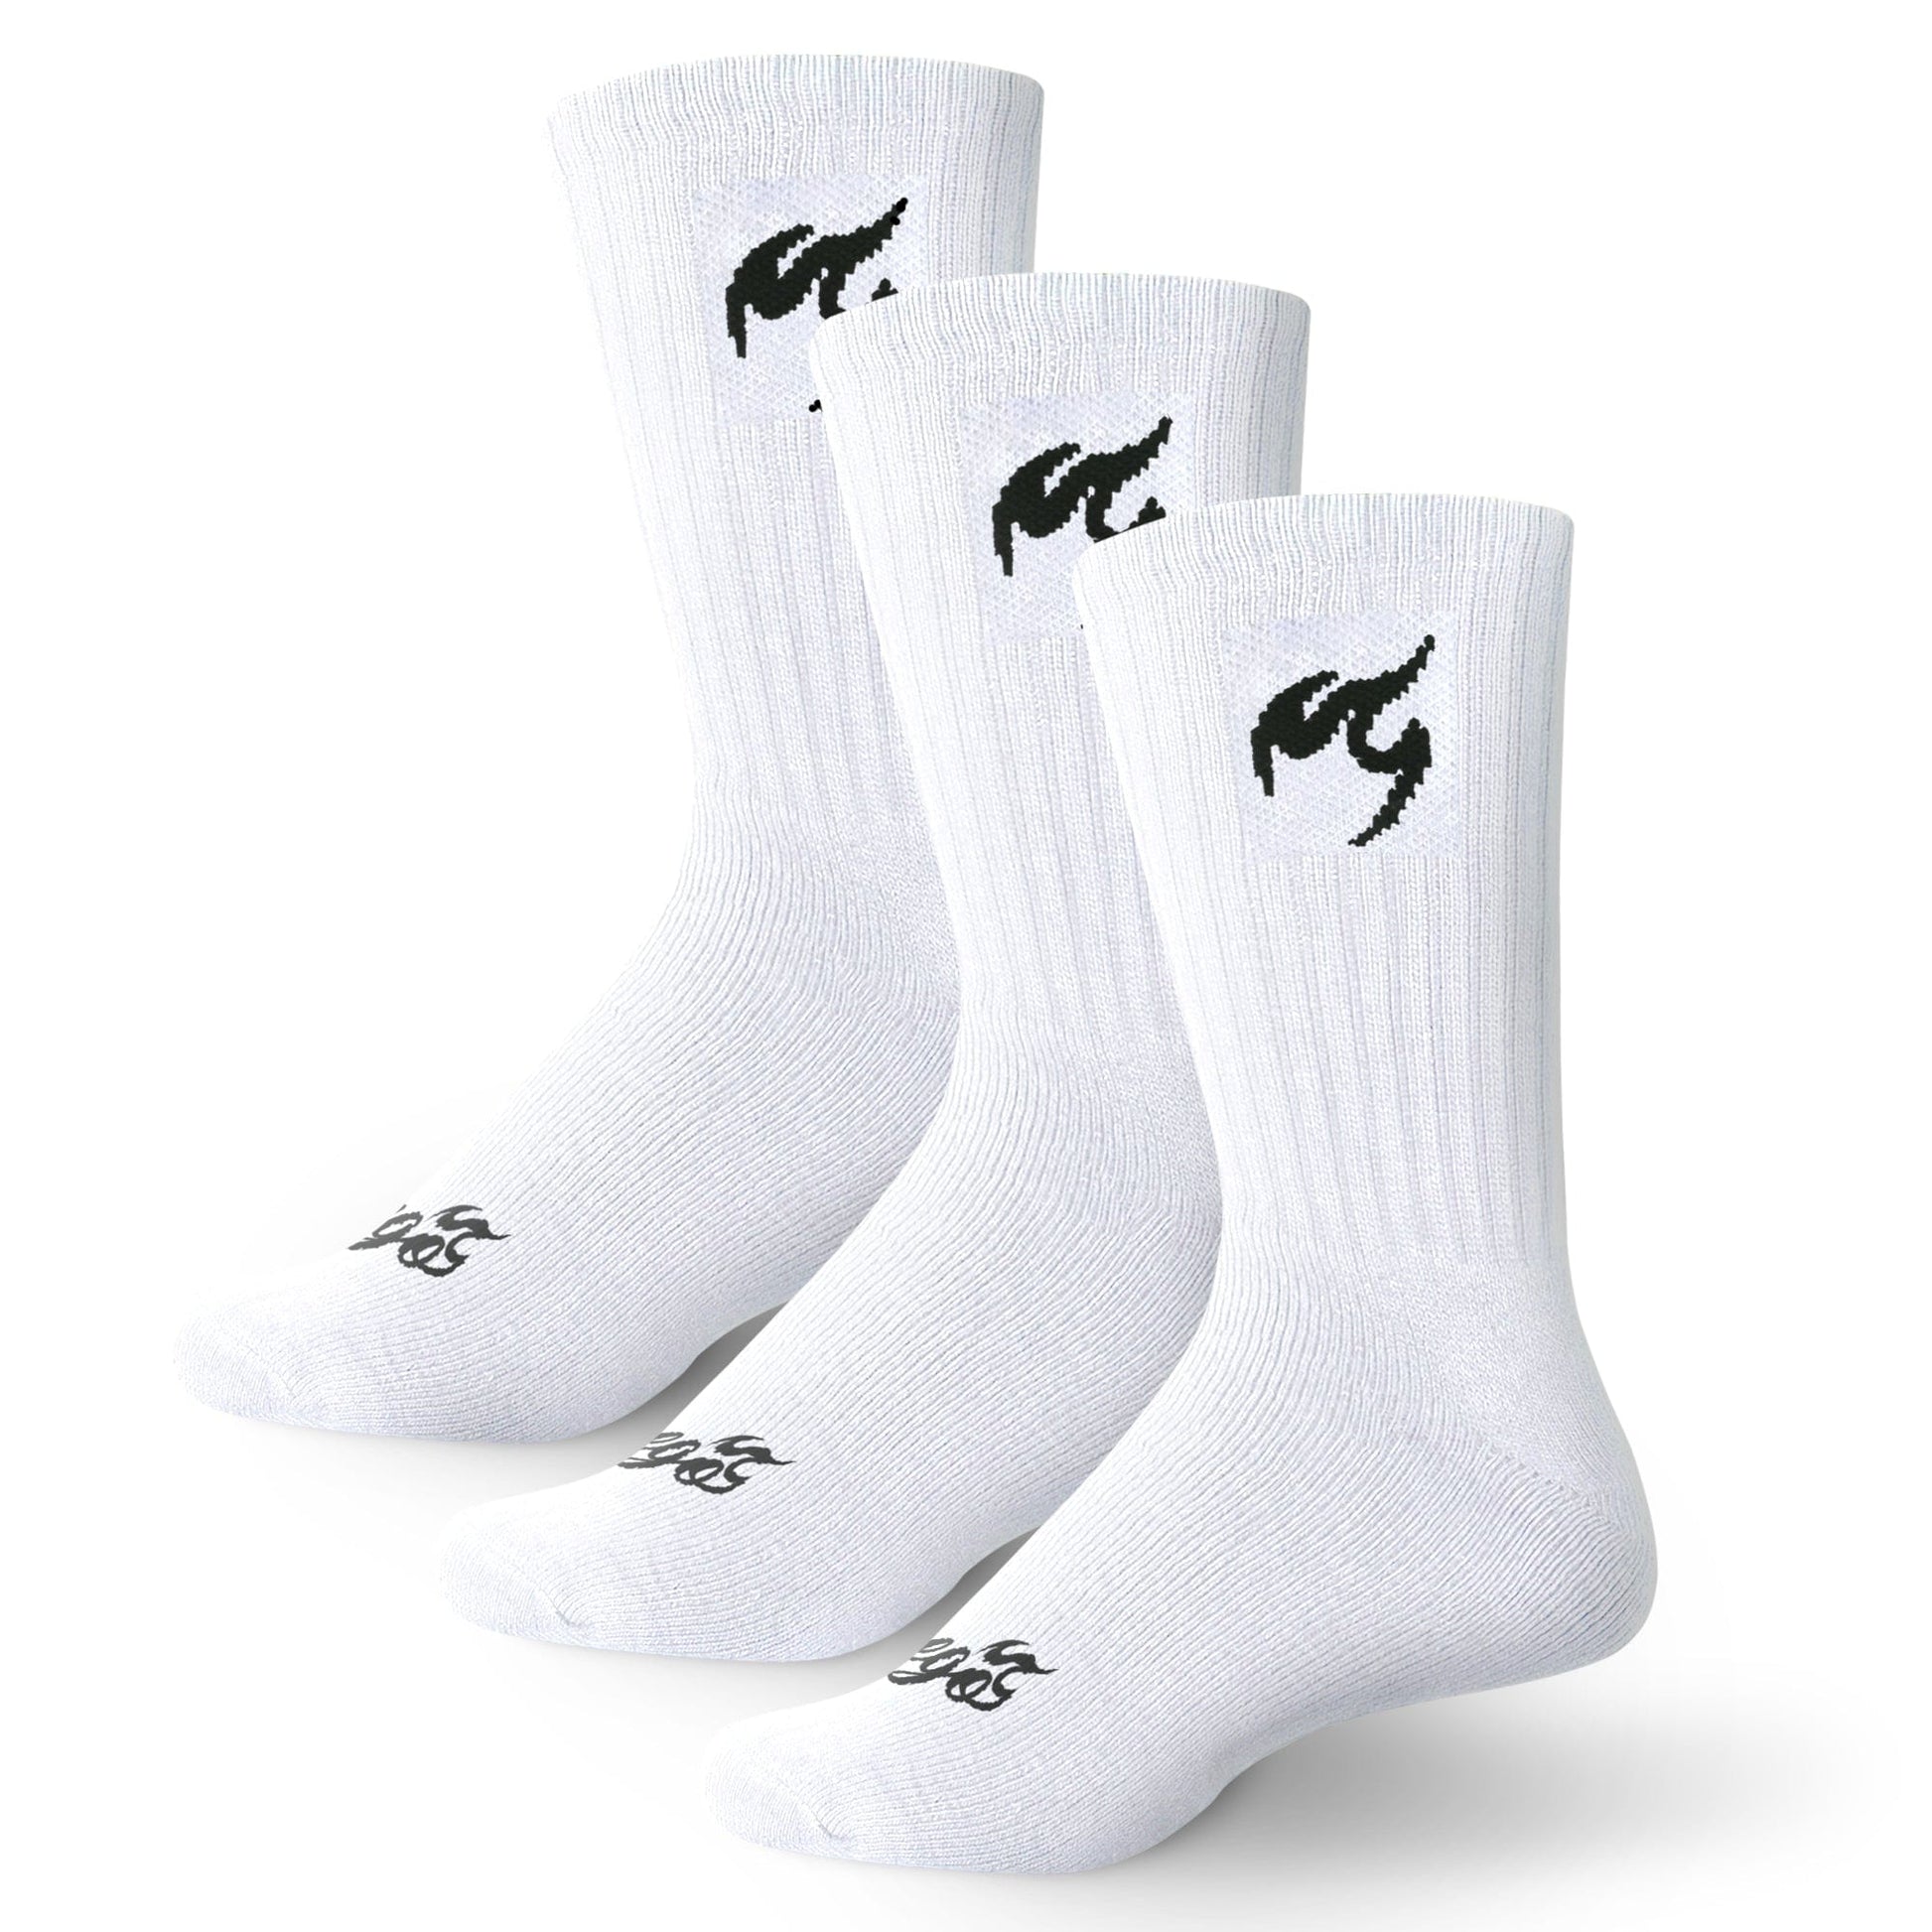 Fuego, Inc. Socks Crew Socks | Black (3-pair)